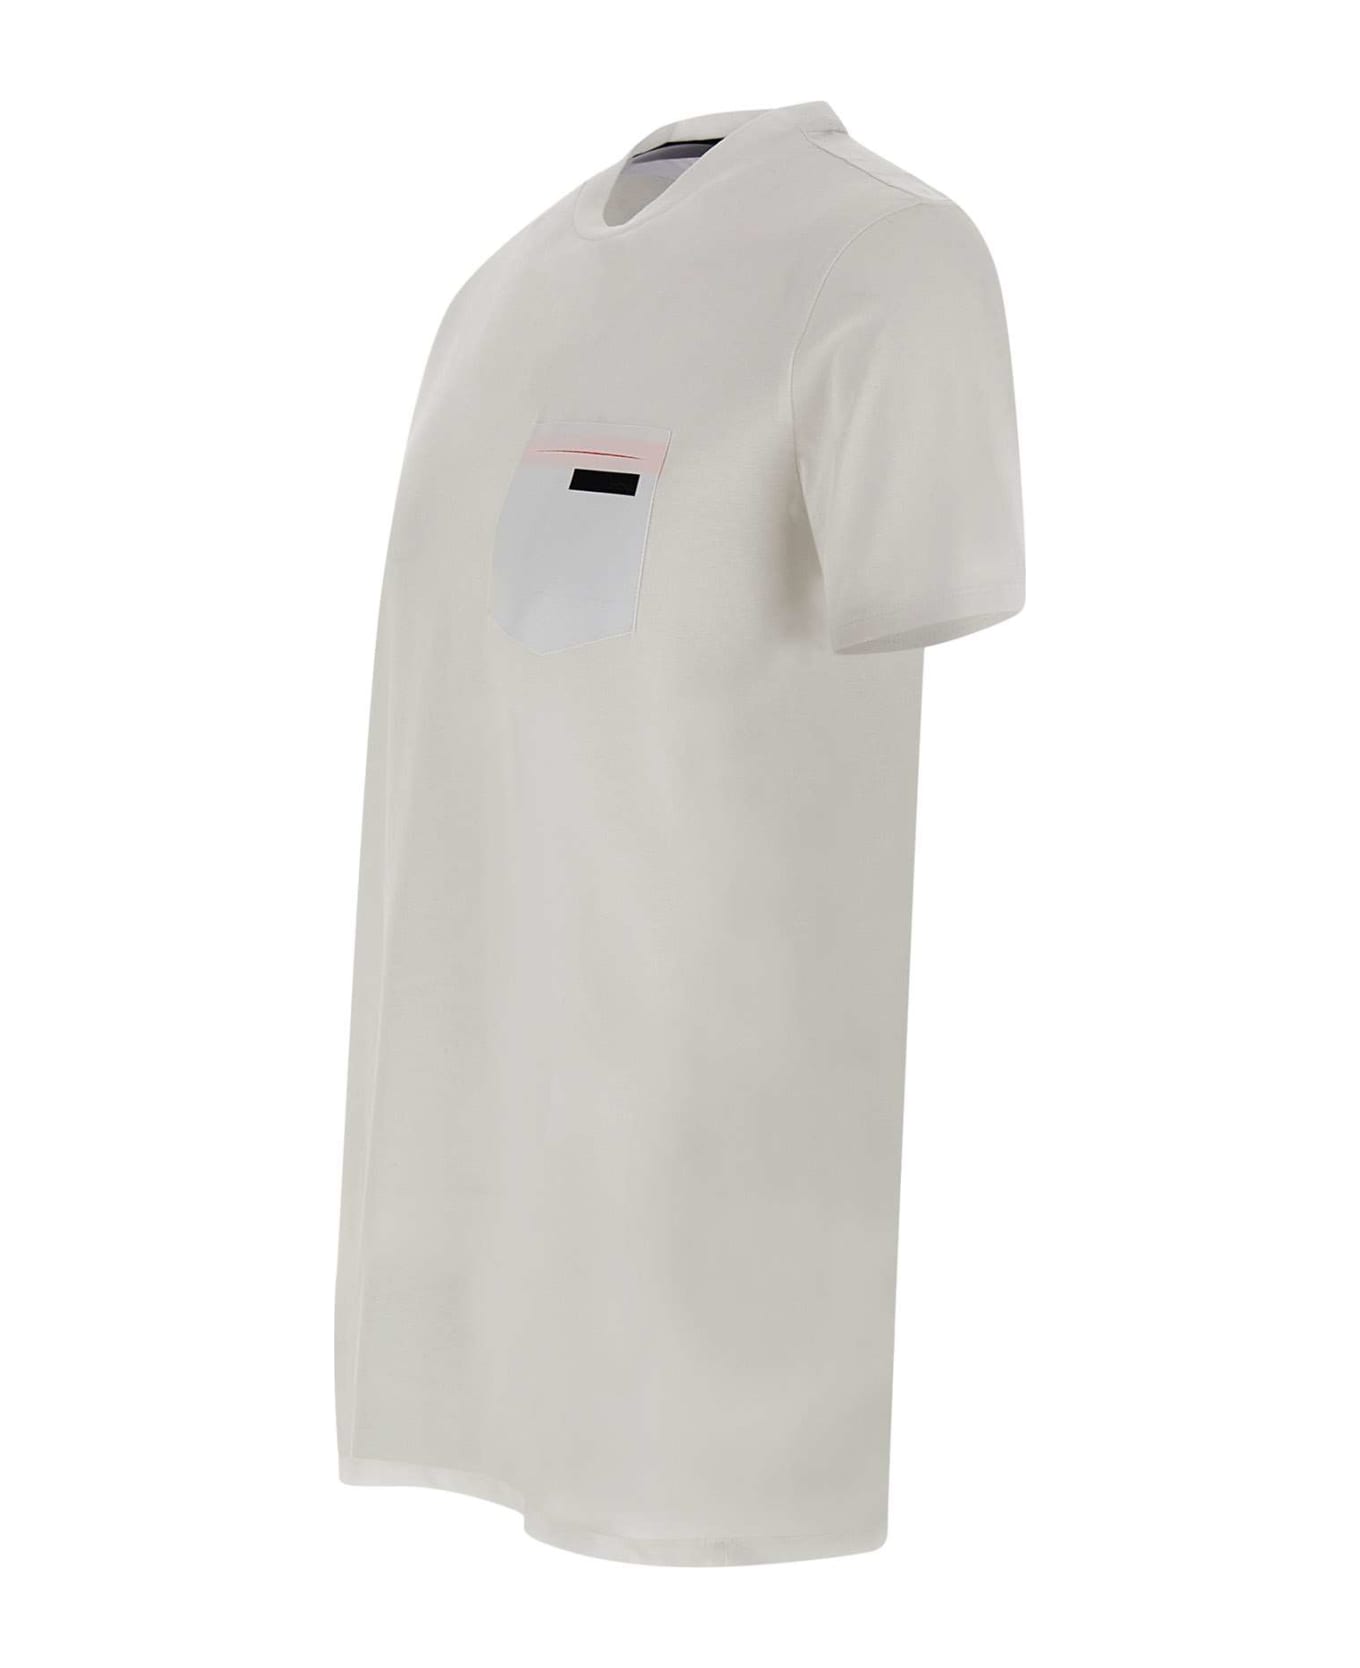 RRD - Roberto Ricci Design "revo Shirty" T-shirt - WHITE